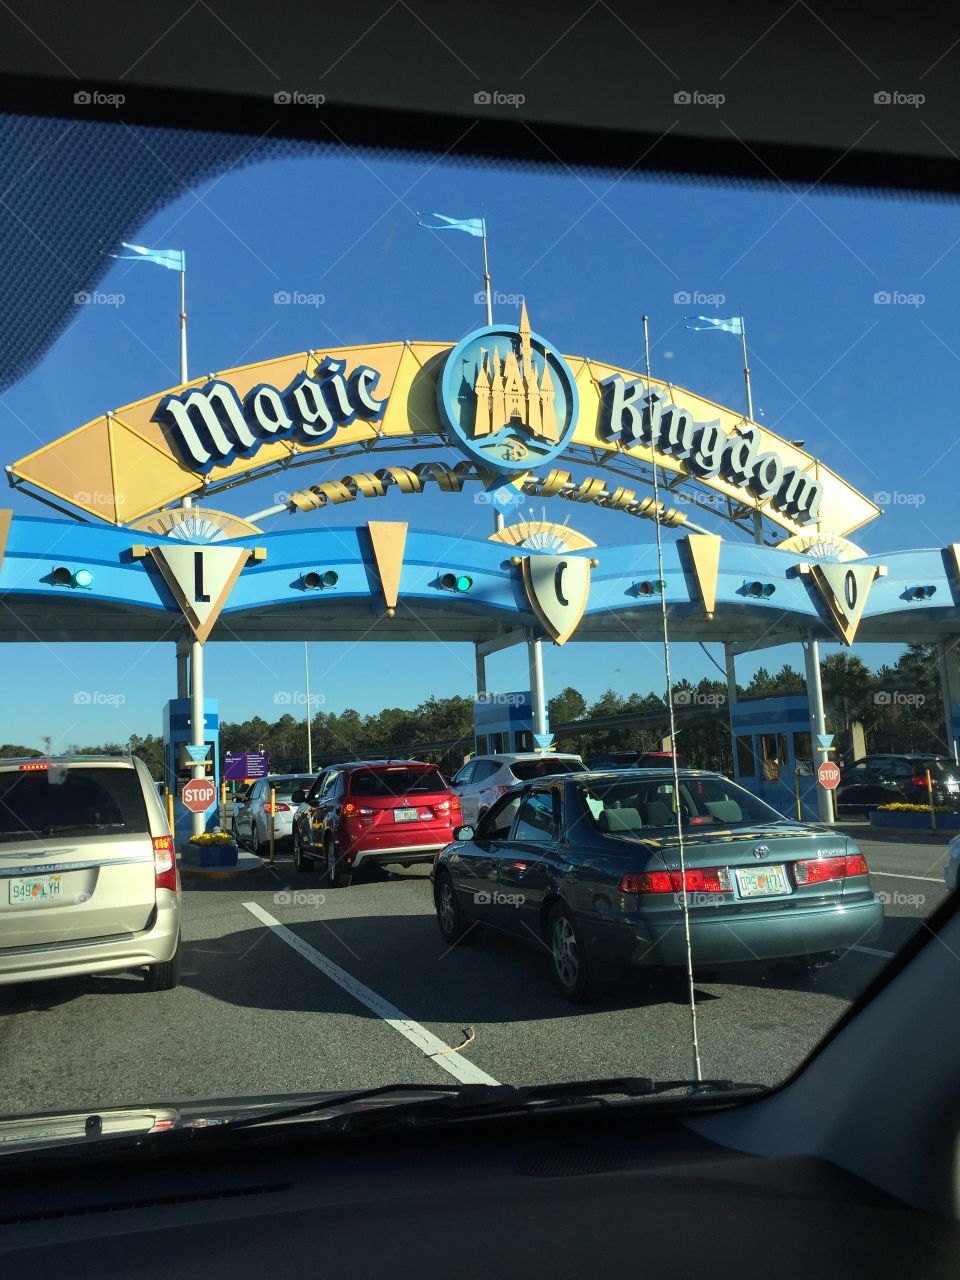 Magic Kingdom entrance 